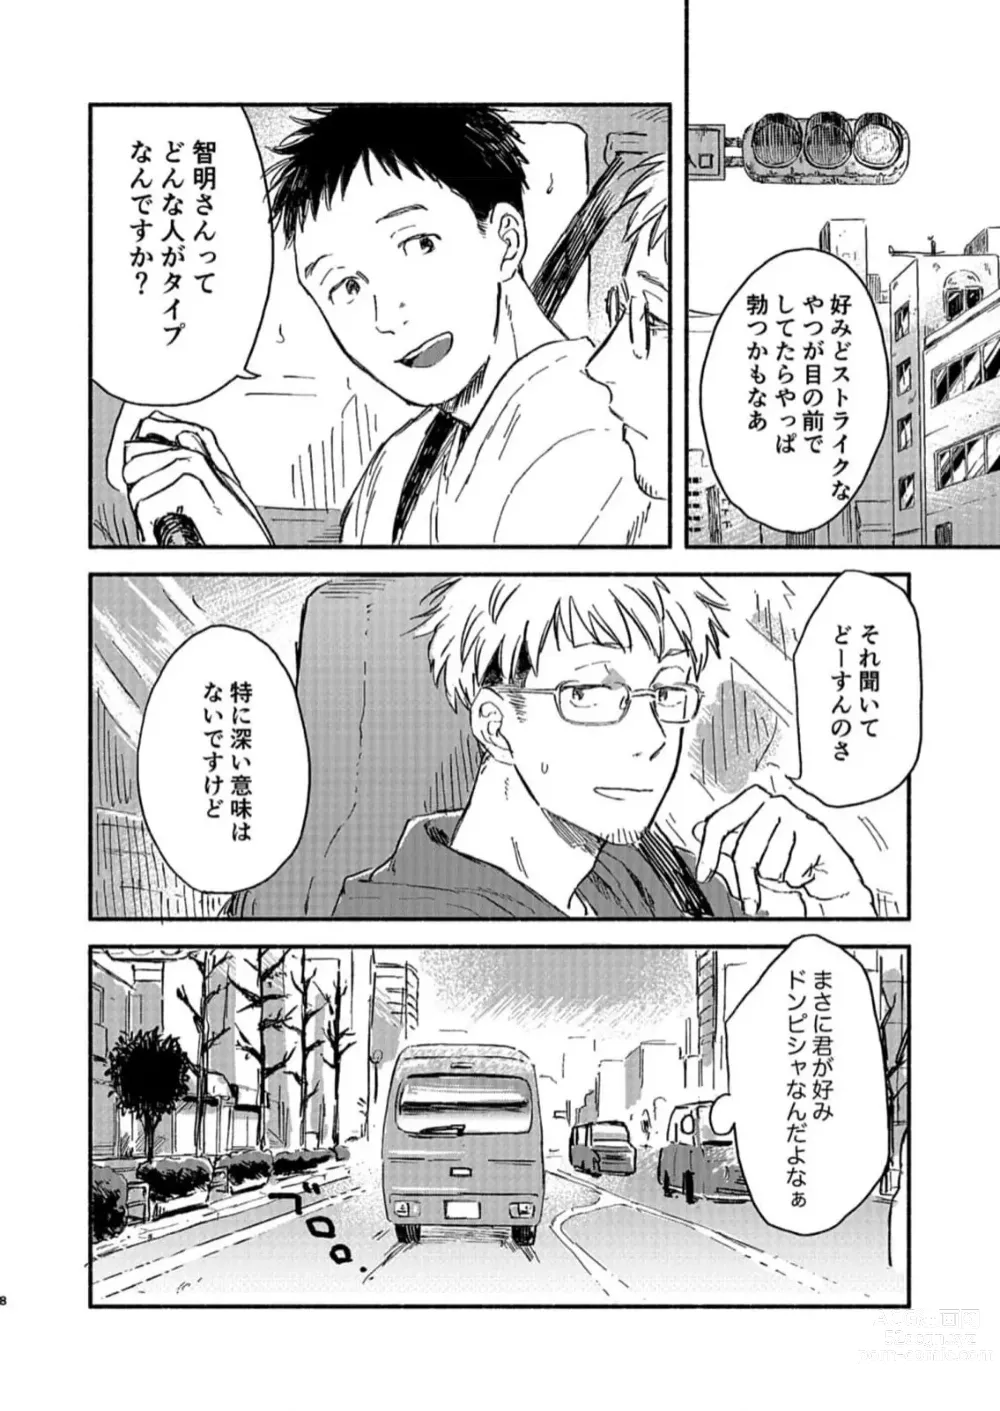 Page 8 of doujinshi Toaru GayVi Seisaku Gaisha Staff no Shanai Renai Jijou - The internal love affairs of the staff of a certain gay video production company.